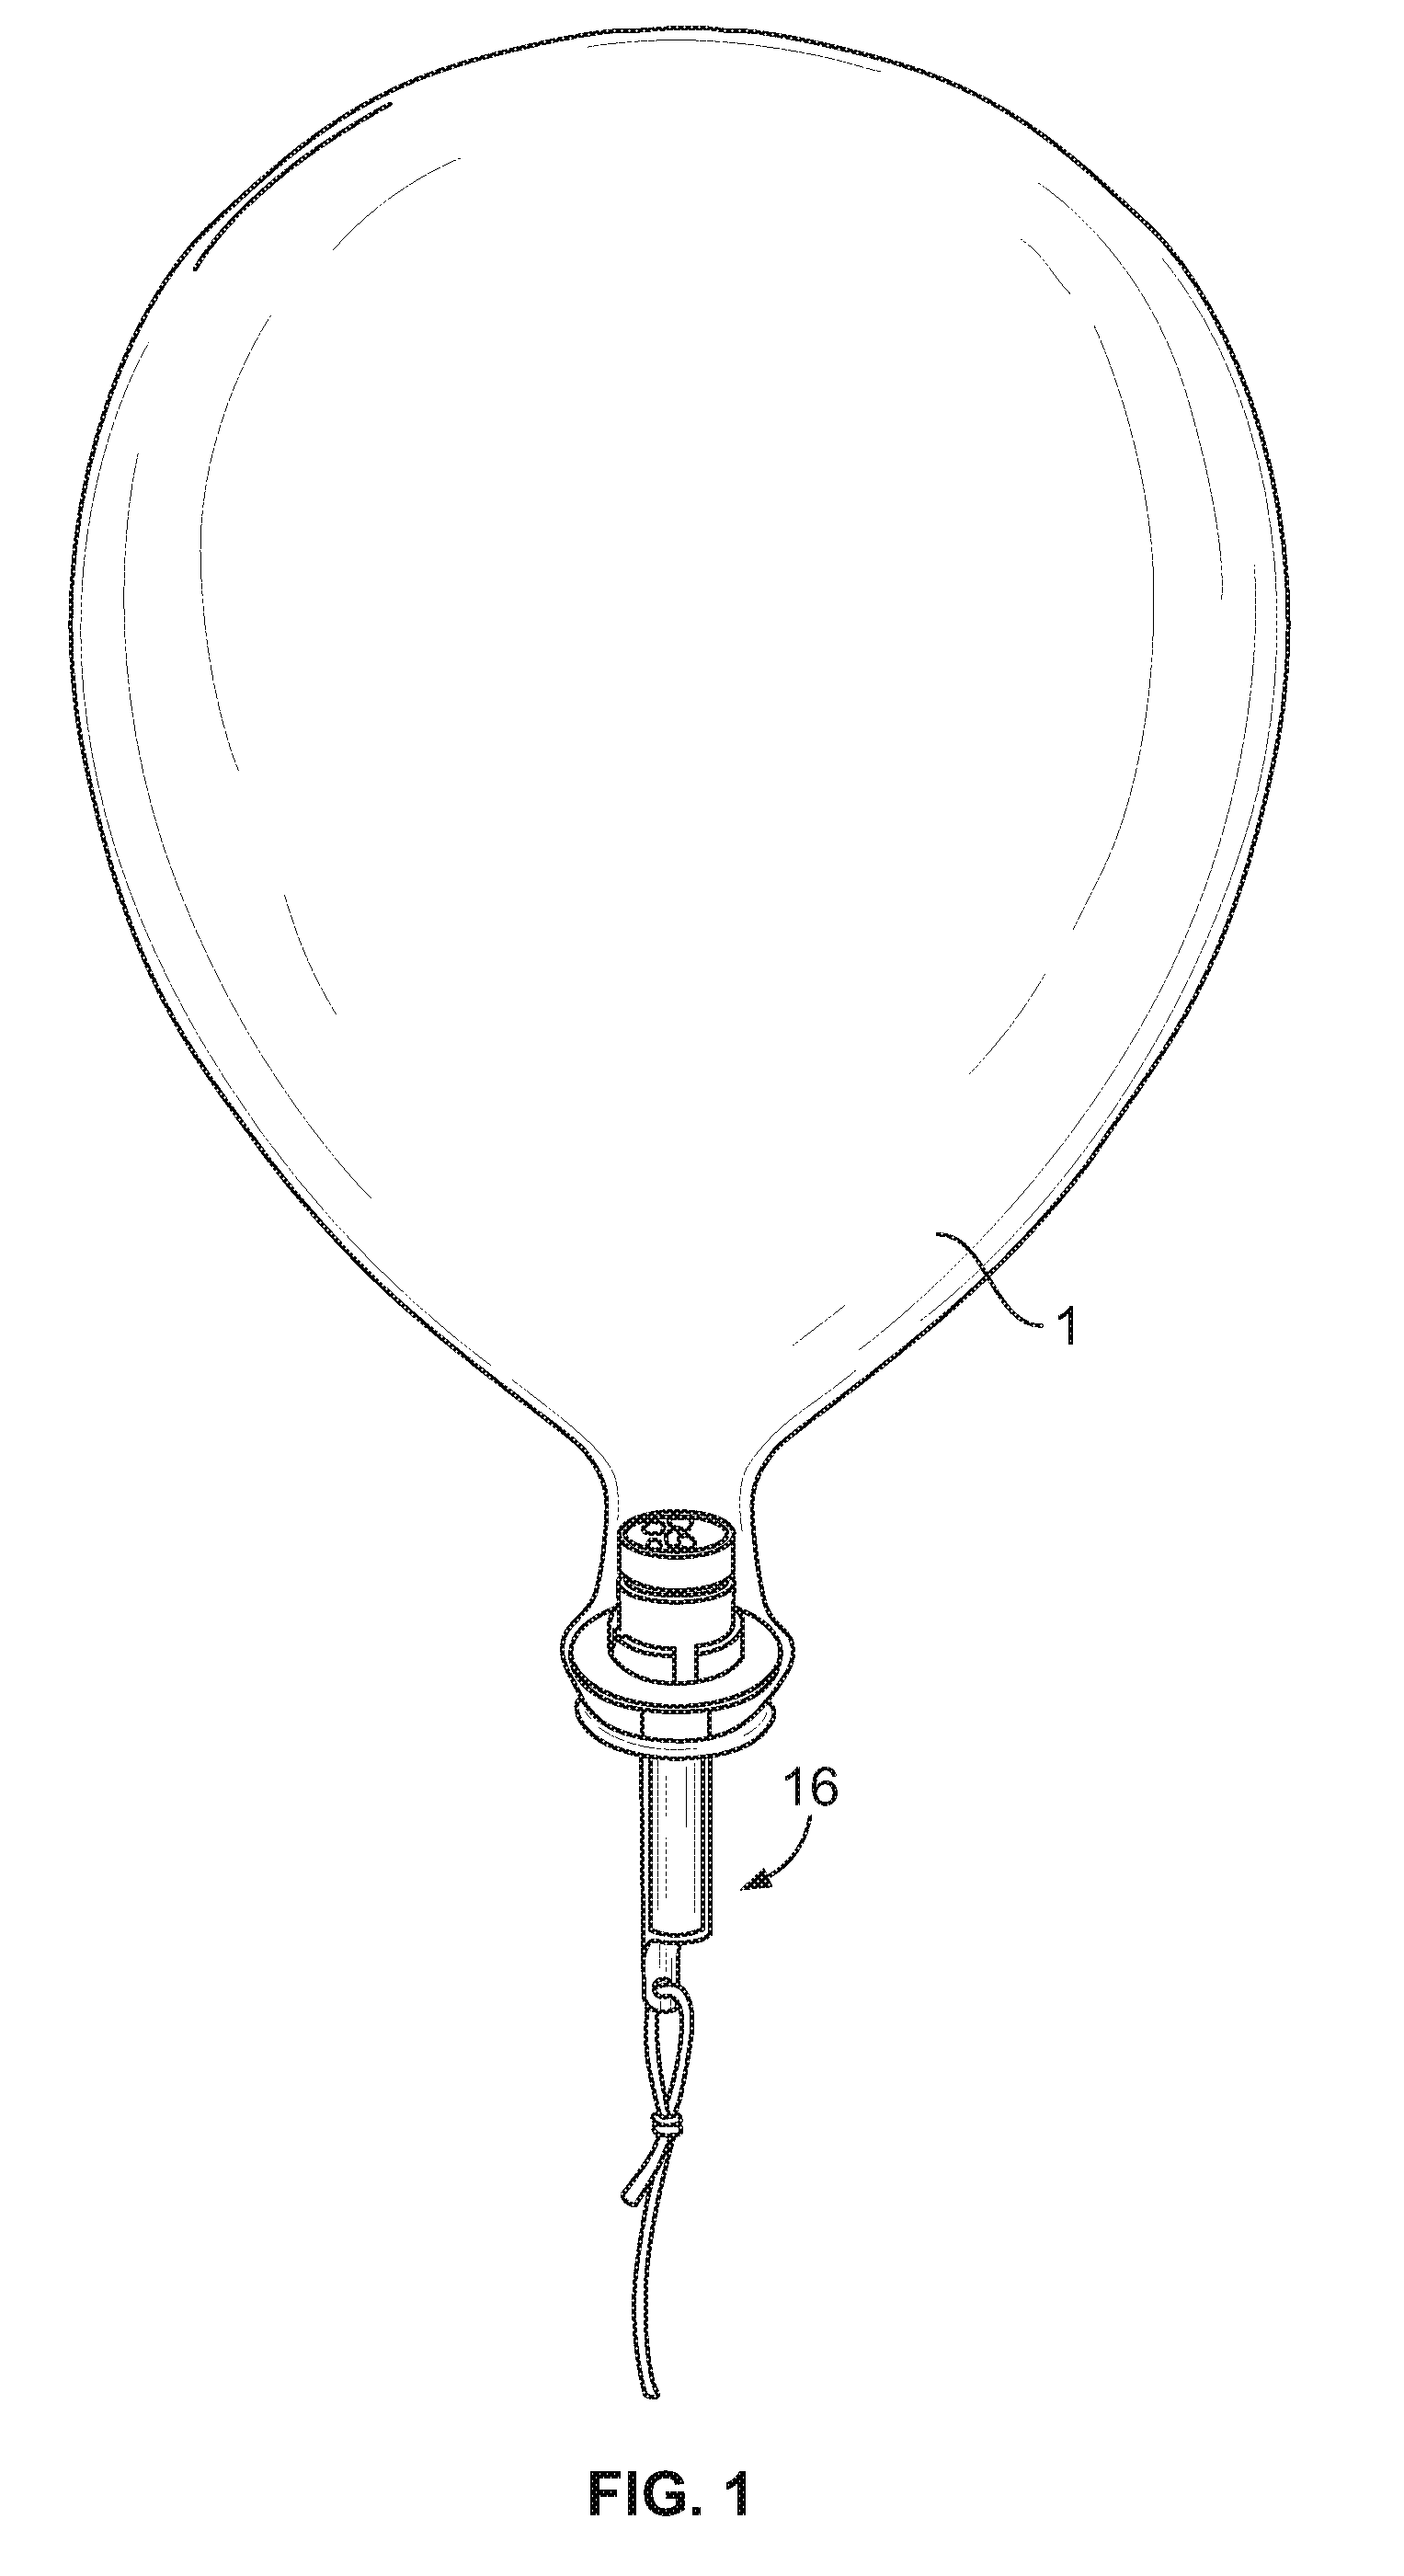 Externally switchable illuminated balloon inflator